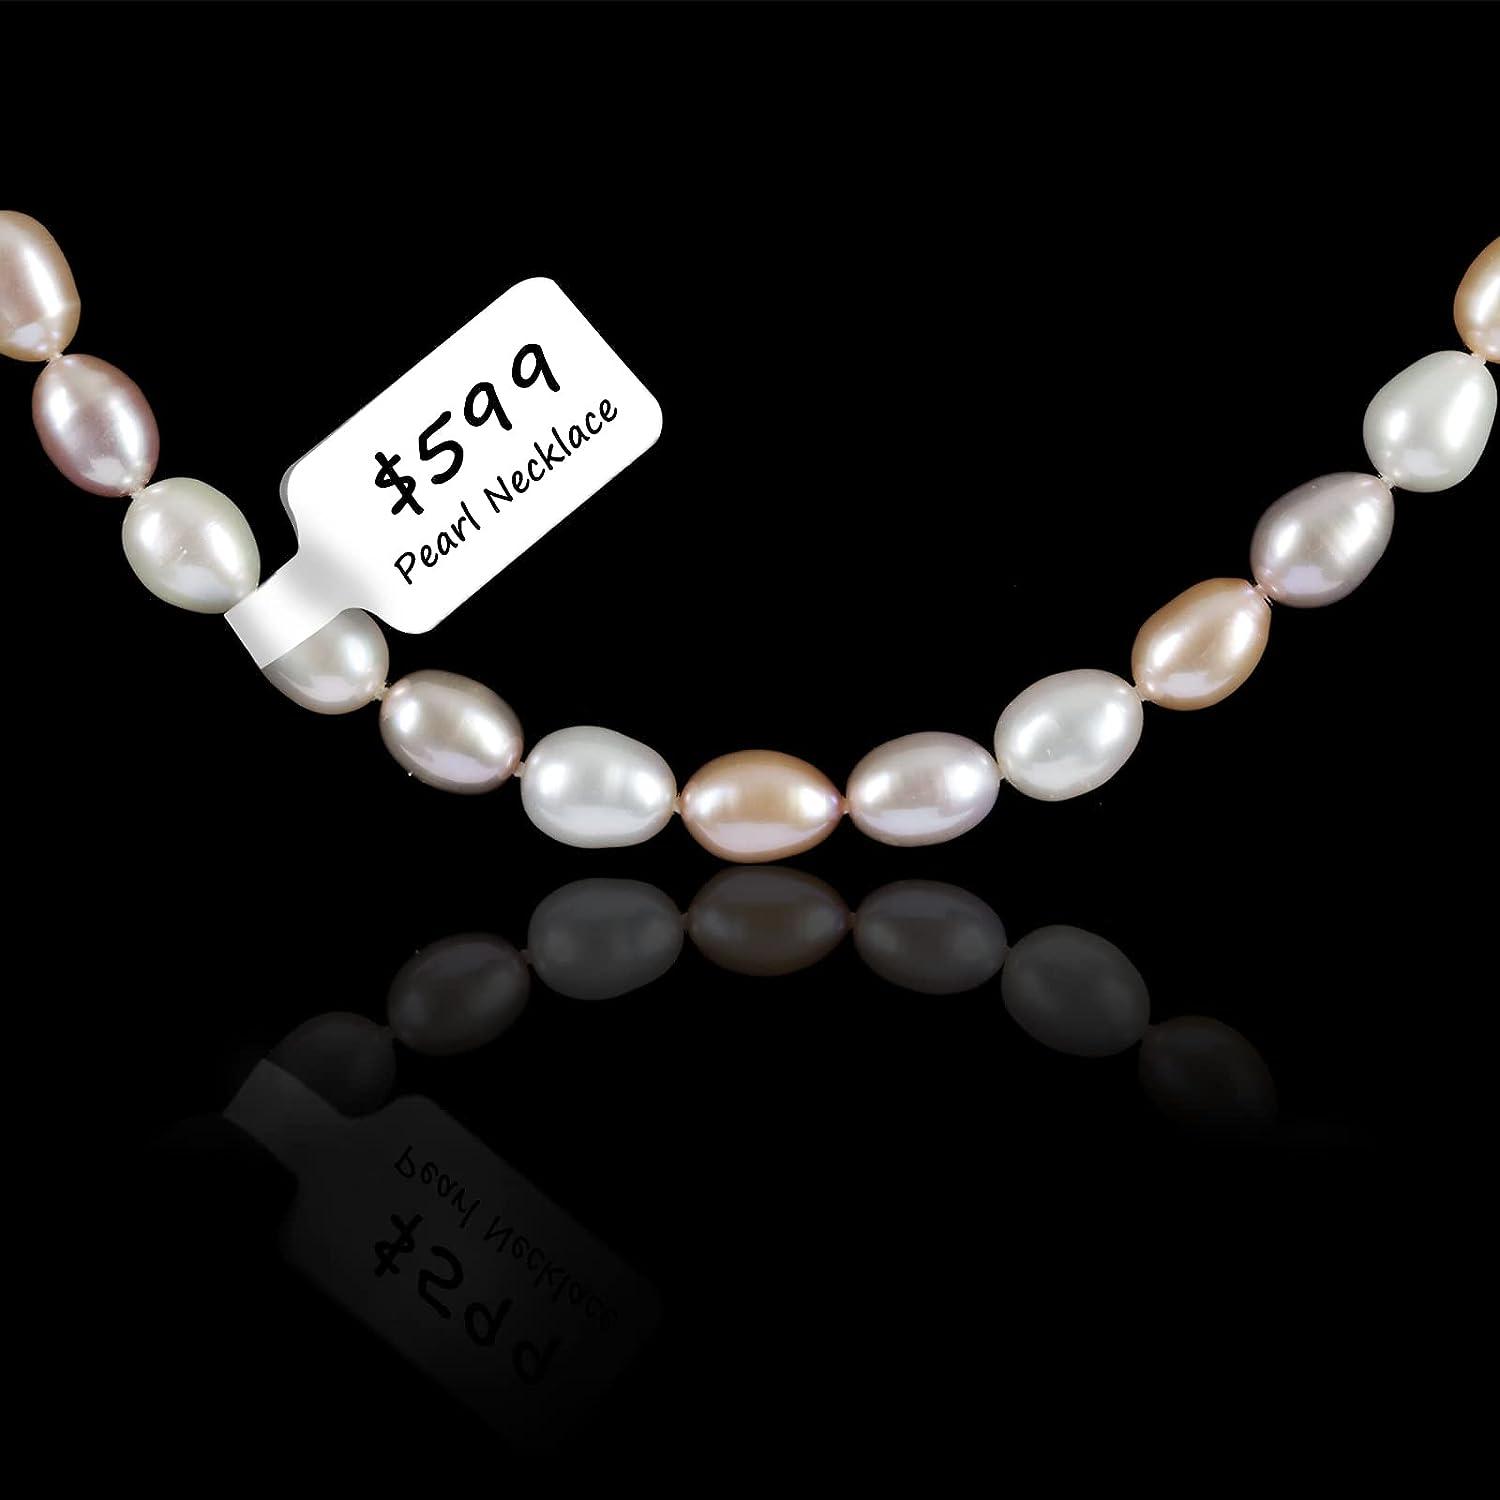  Blank Jewelry Price Tags Stickers White Jewelry Price